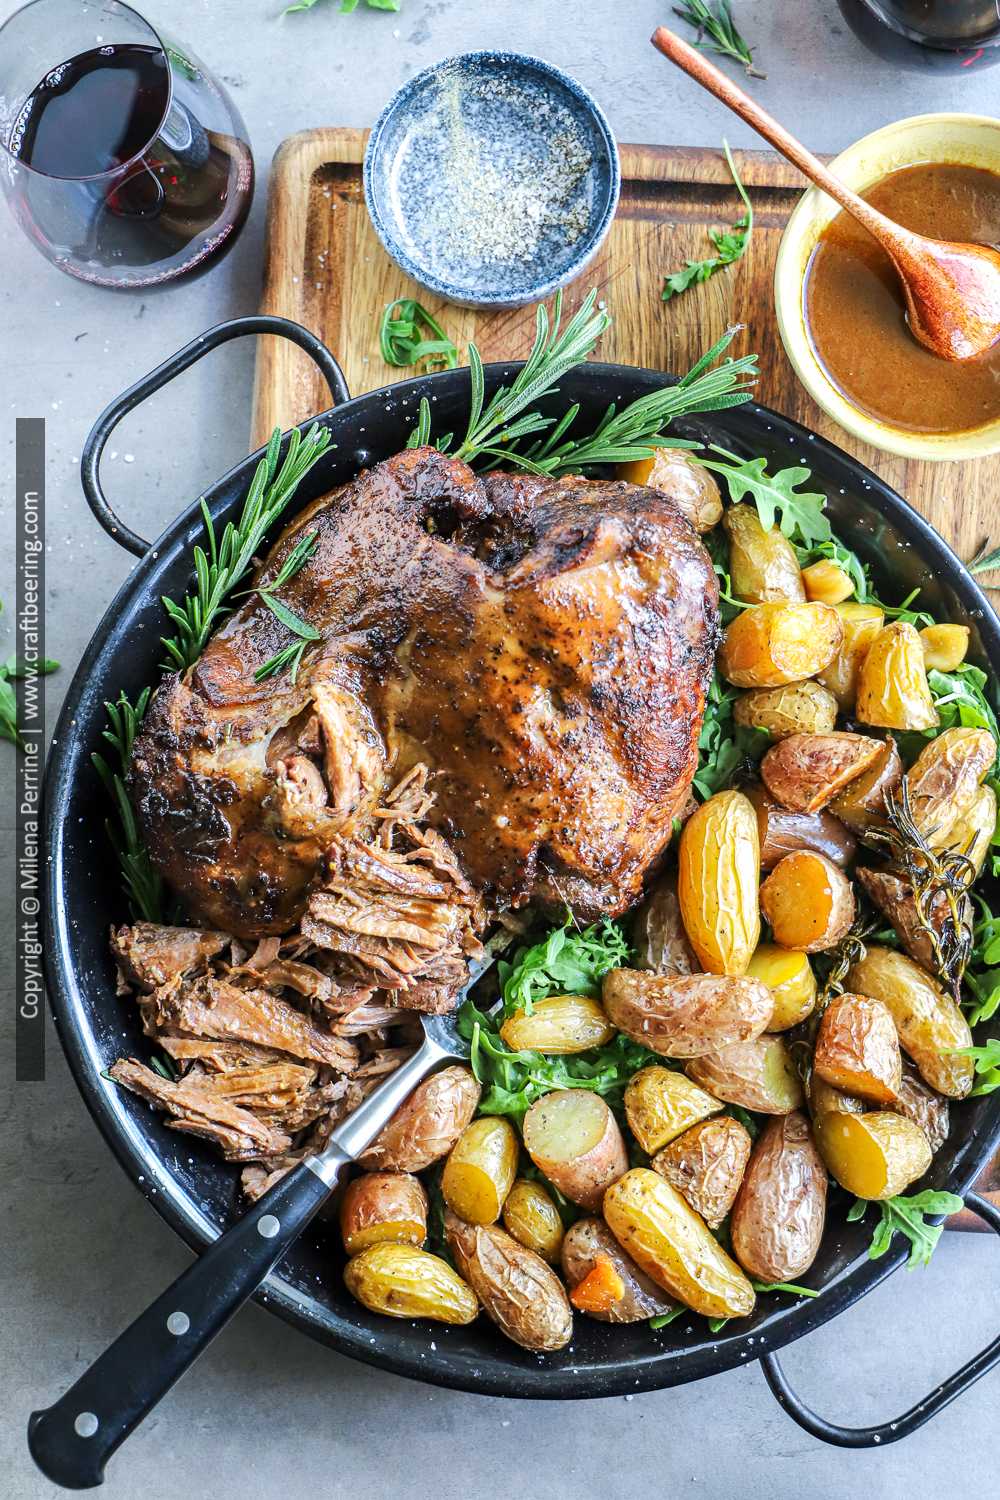 Platter with leg of lamb crock pot roast and potatoes. 